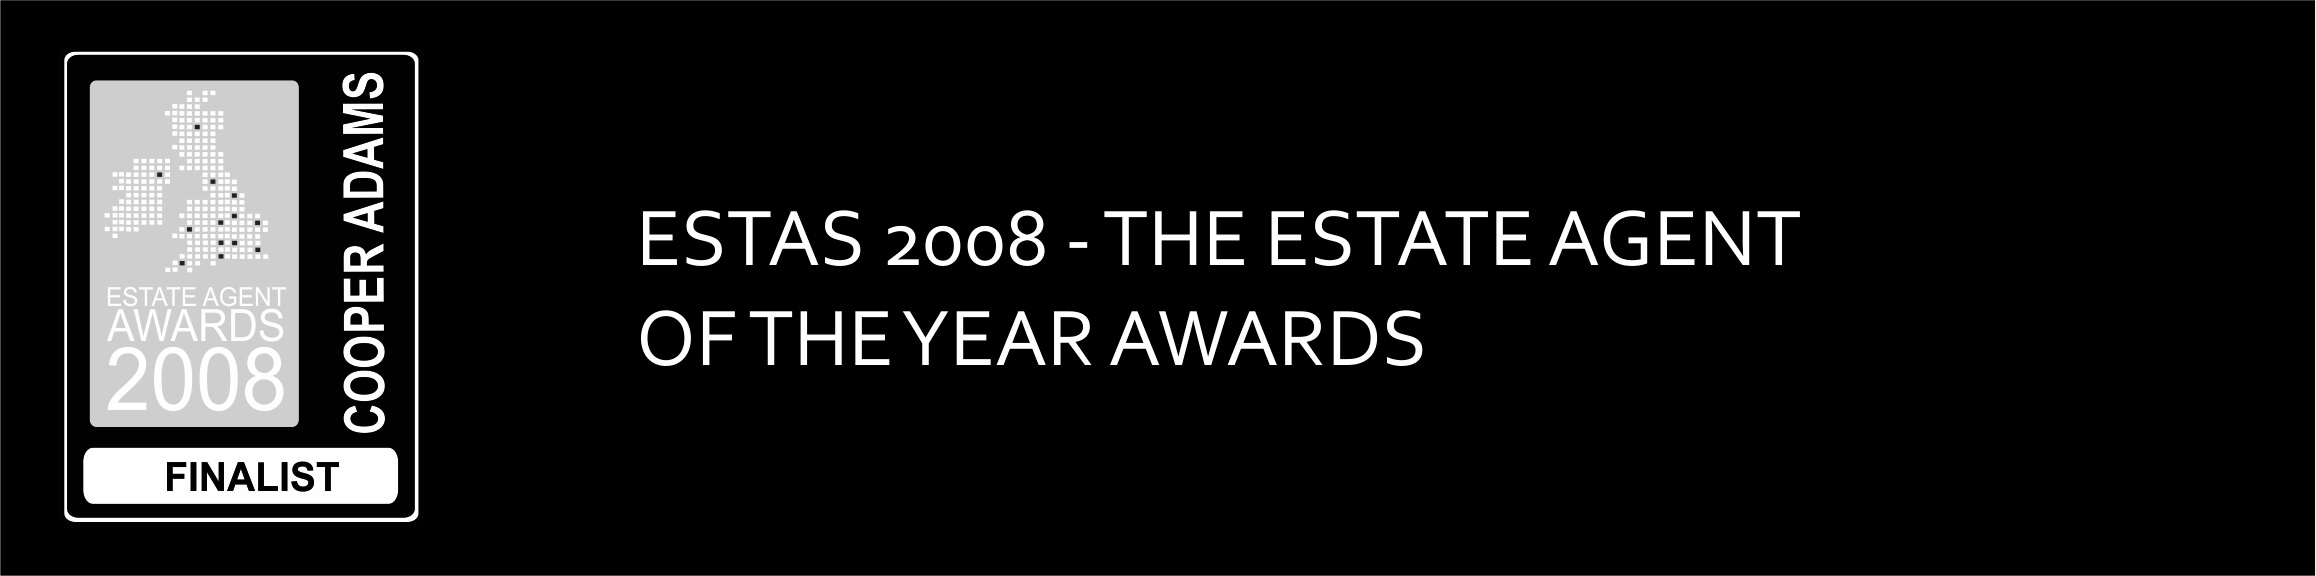 ESTAS Estate Agent of the Year Awards 2008